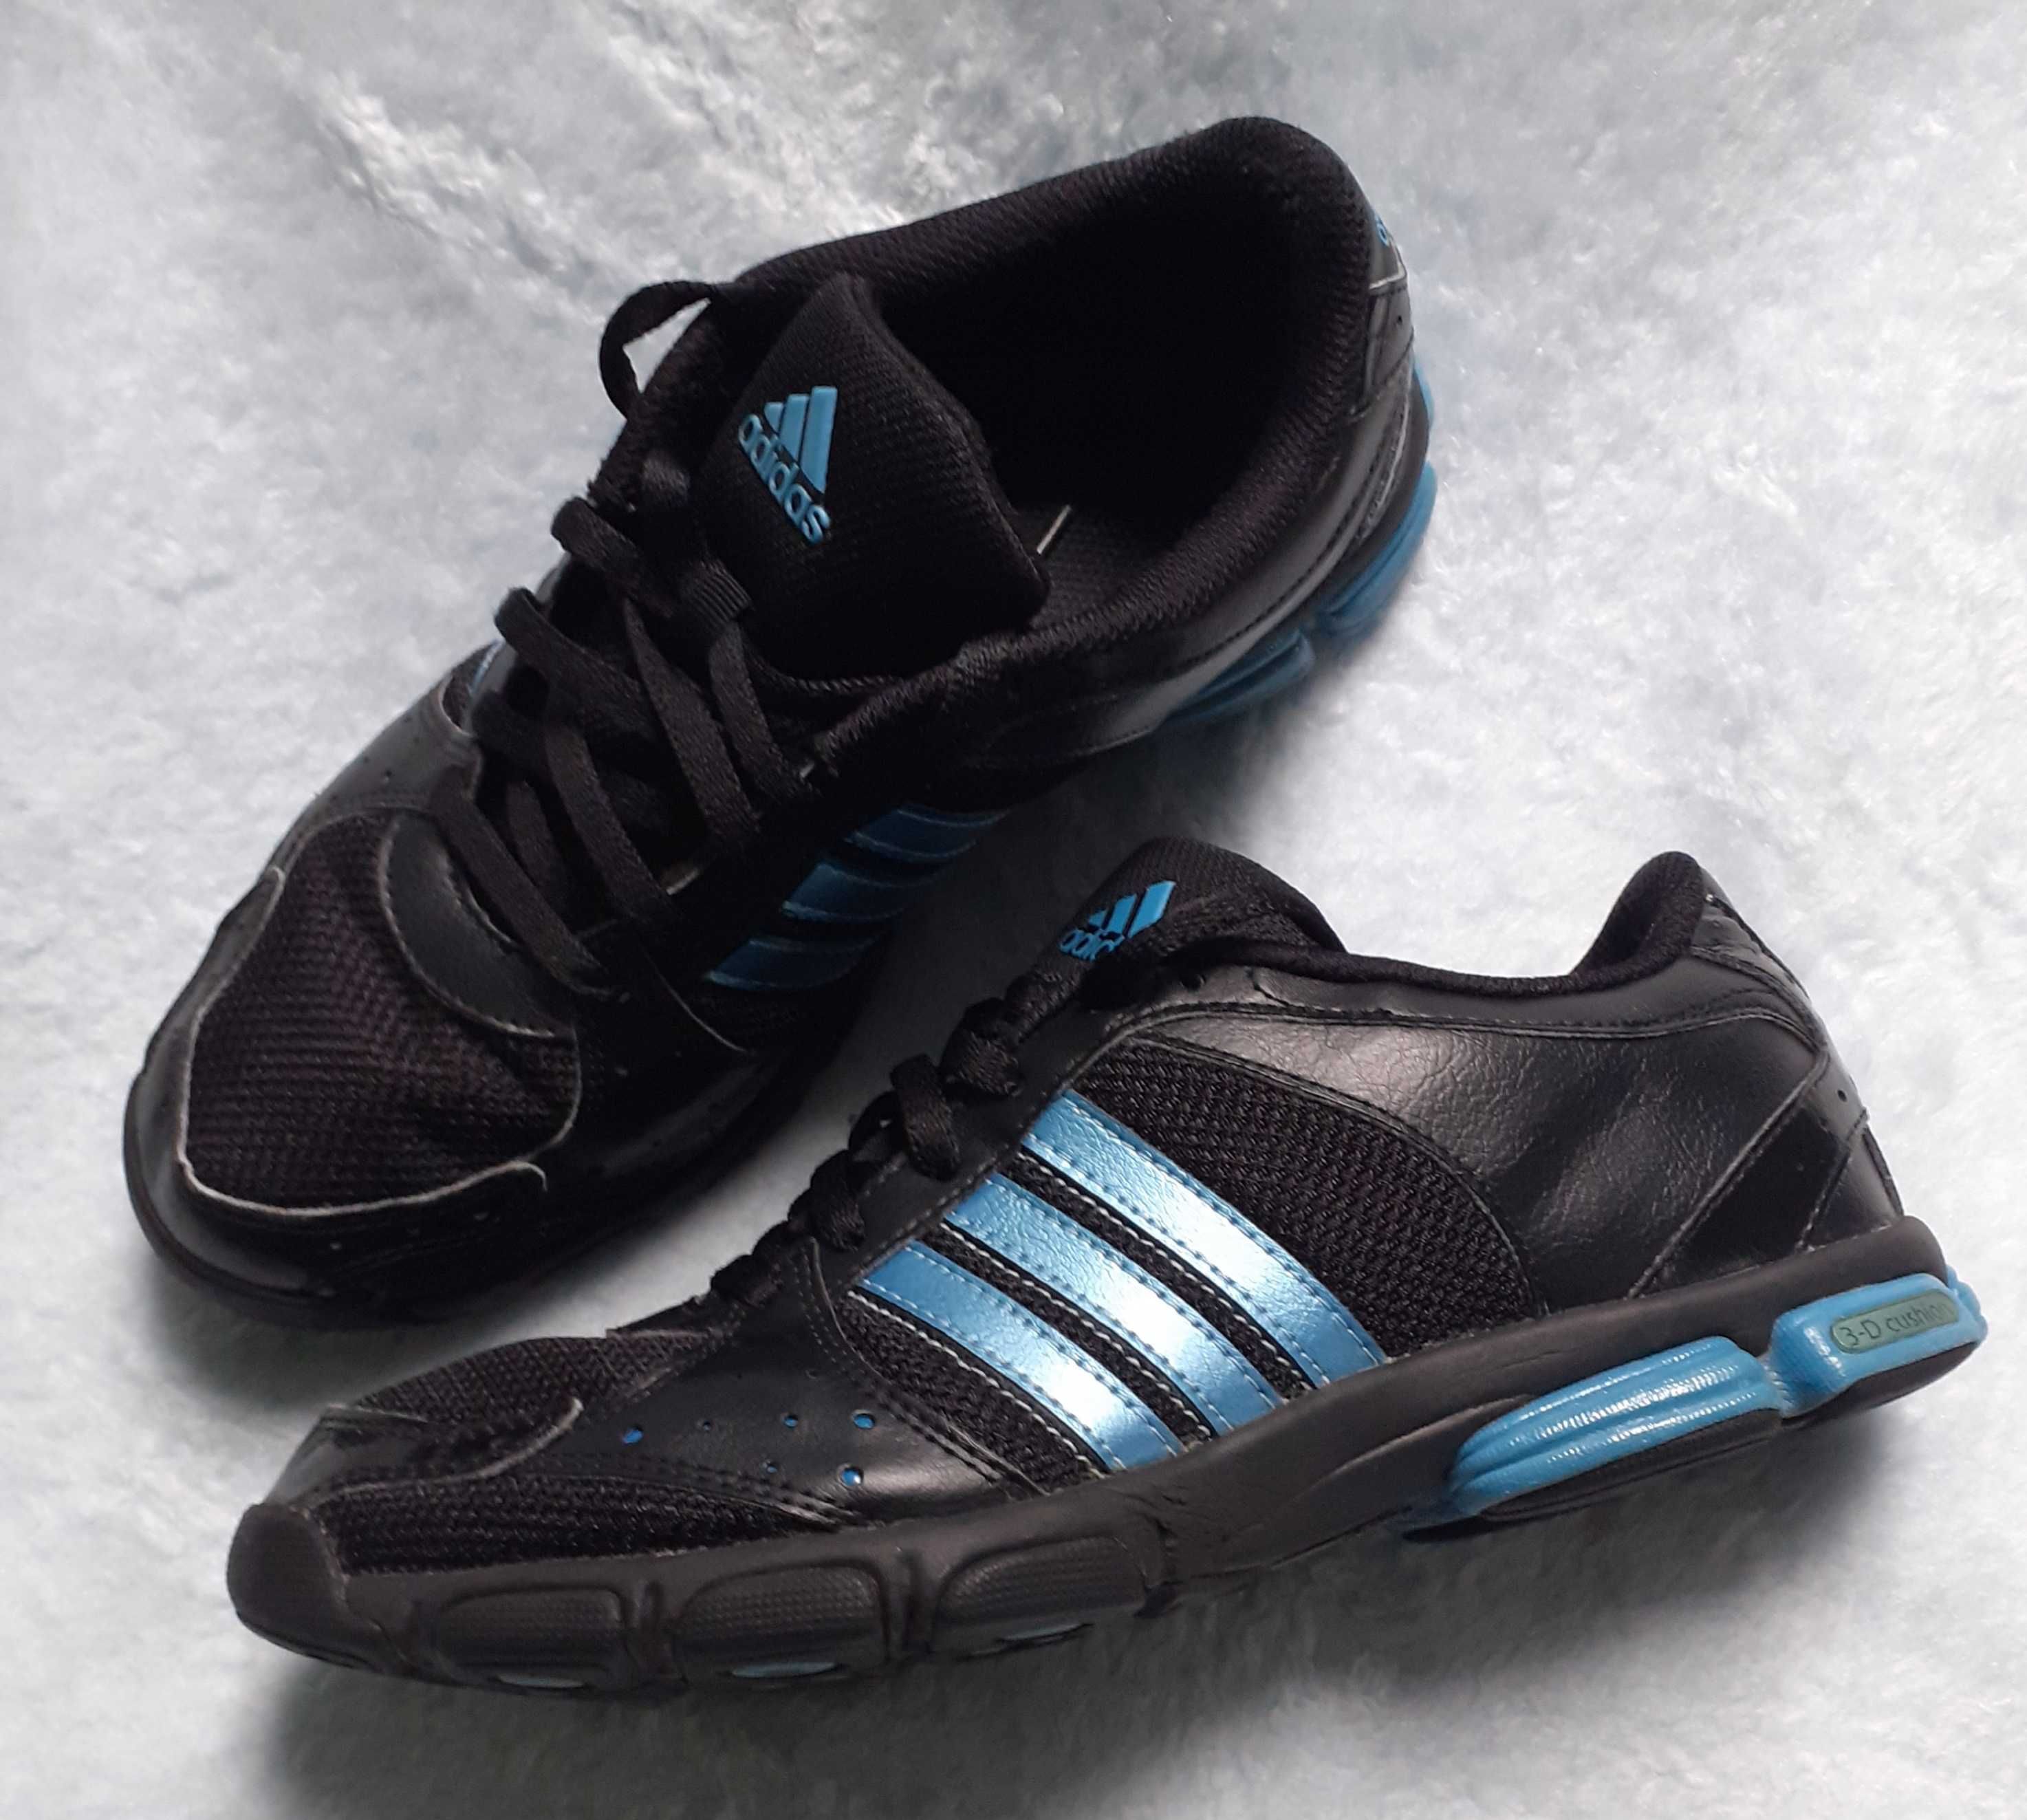 On foot tread Stand up instead Adidas sportowe buty 3D cushion torsion system rozm. 36 wkł. 22,5 cm  Legnica • OLX.pl